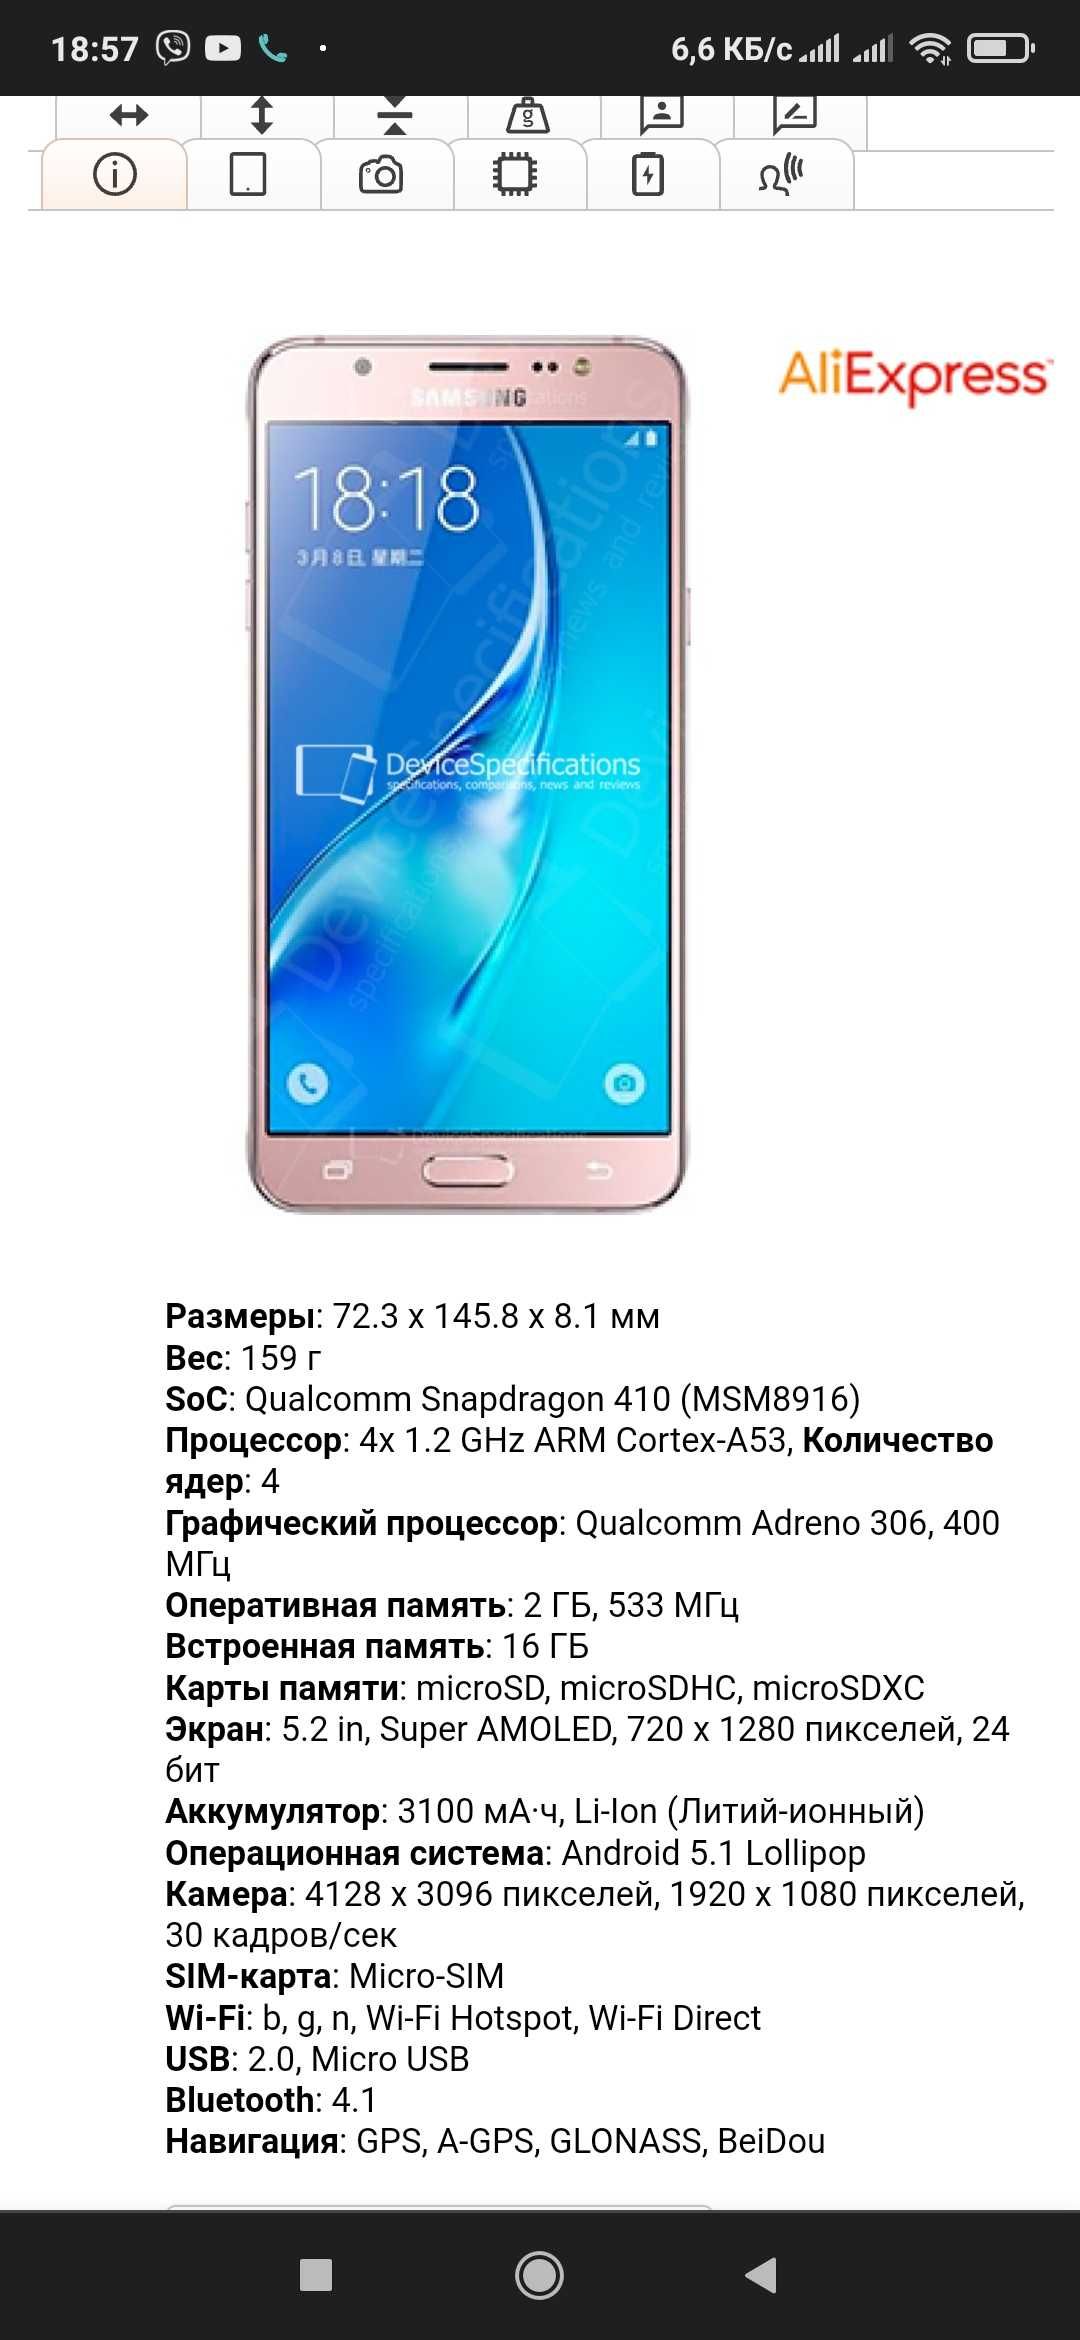 Samsung J5 (J510H) 16Gb Black (Super AMOLED,Android 7.1) в хорош. сост